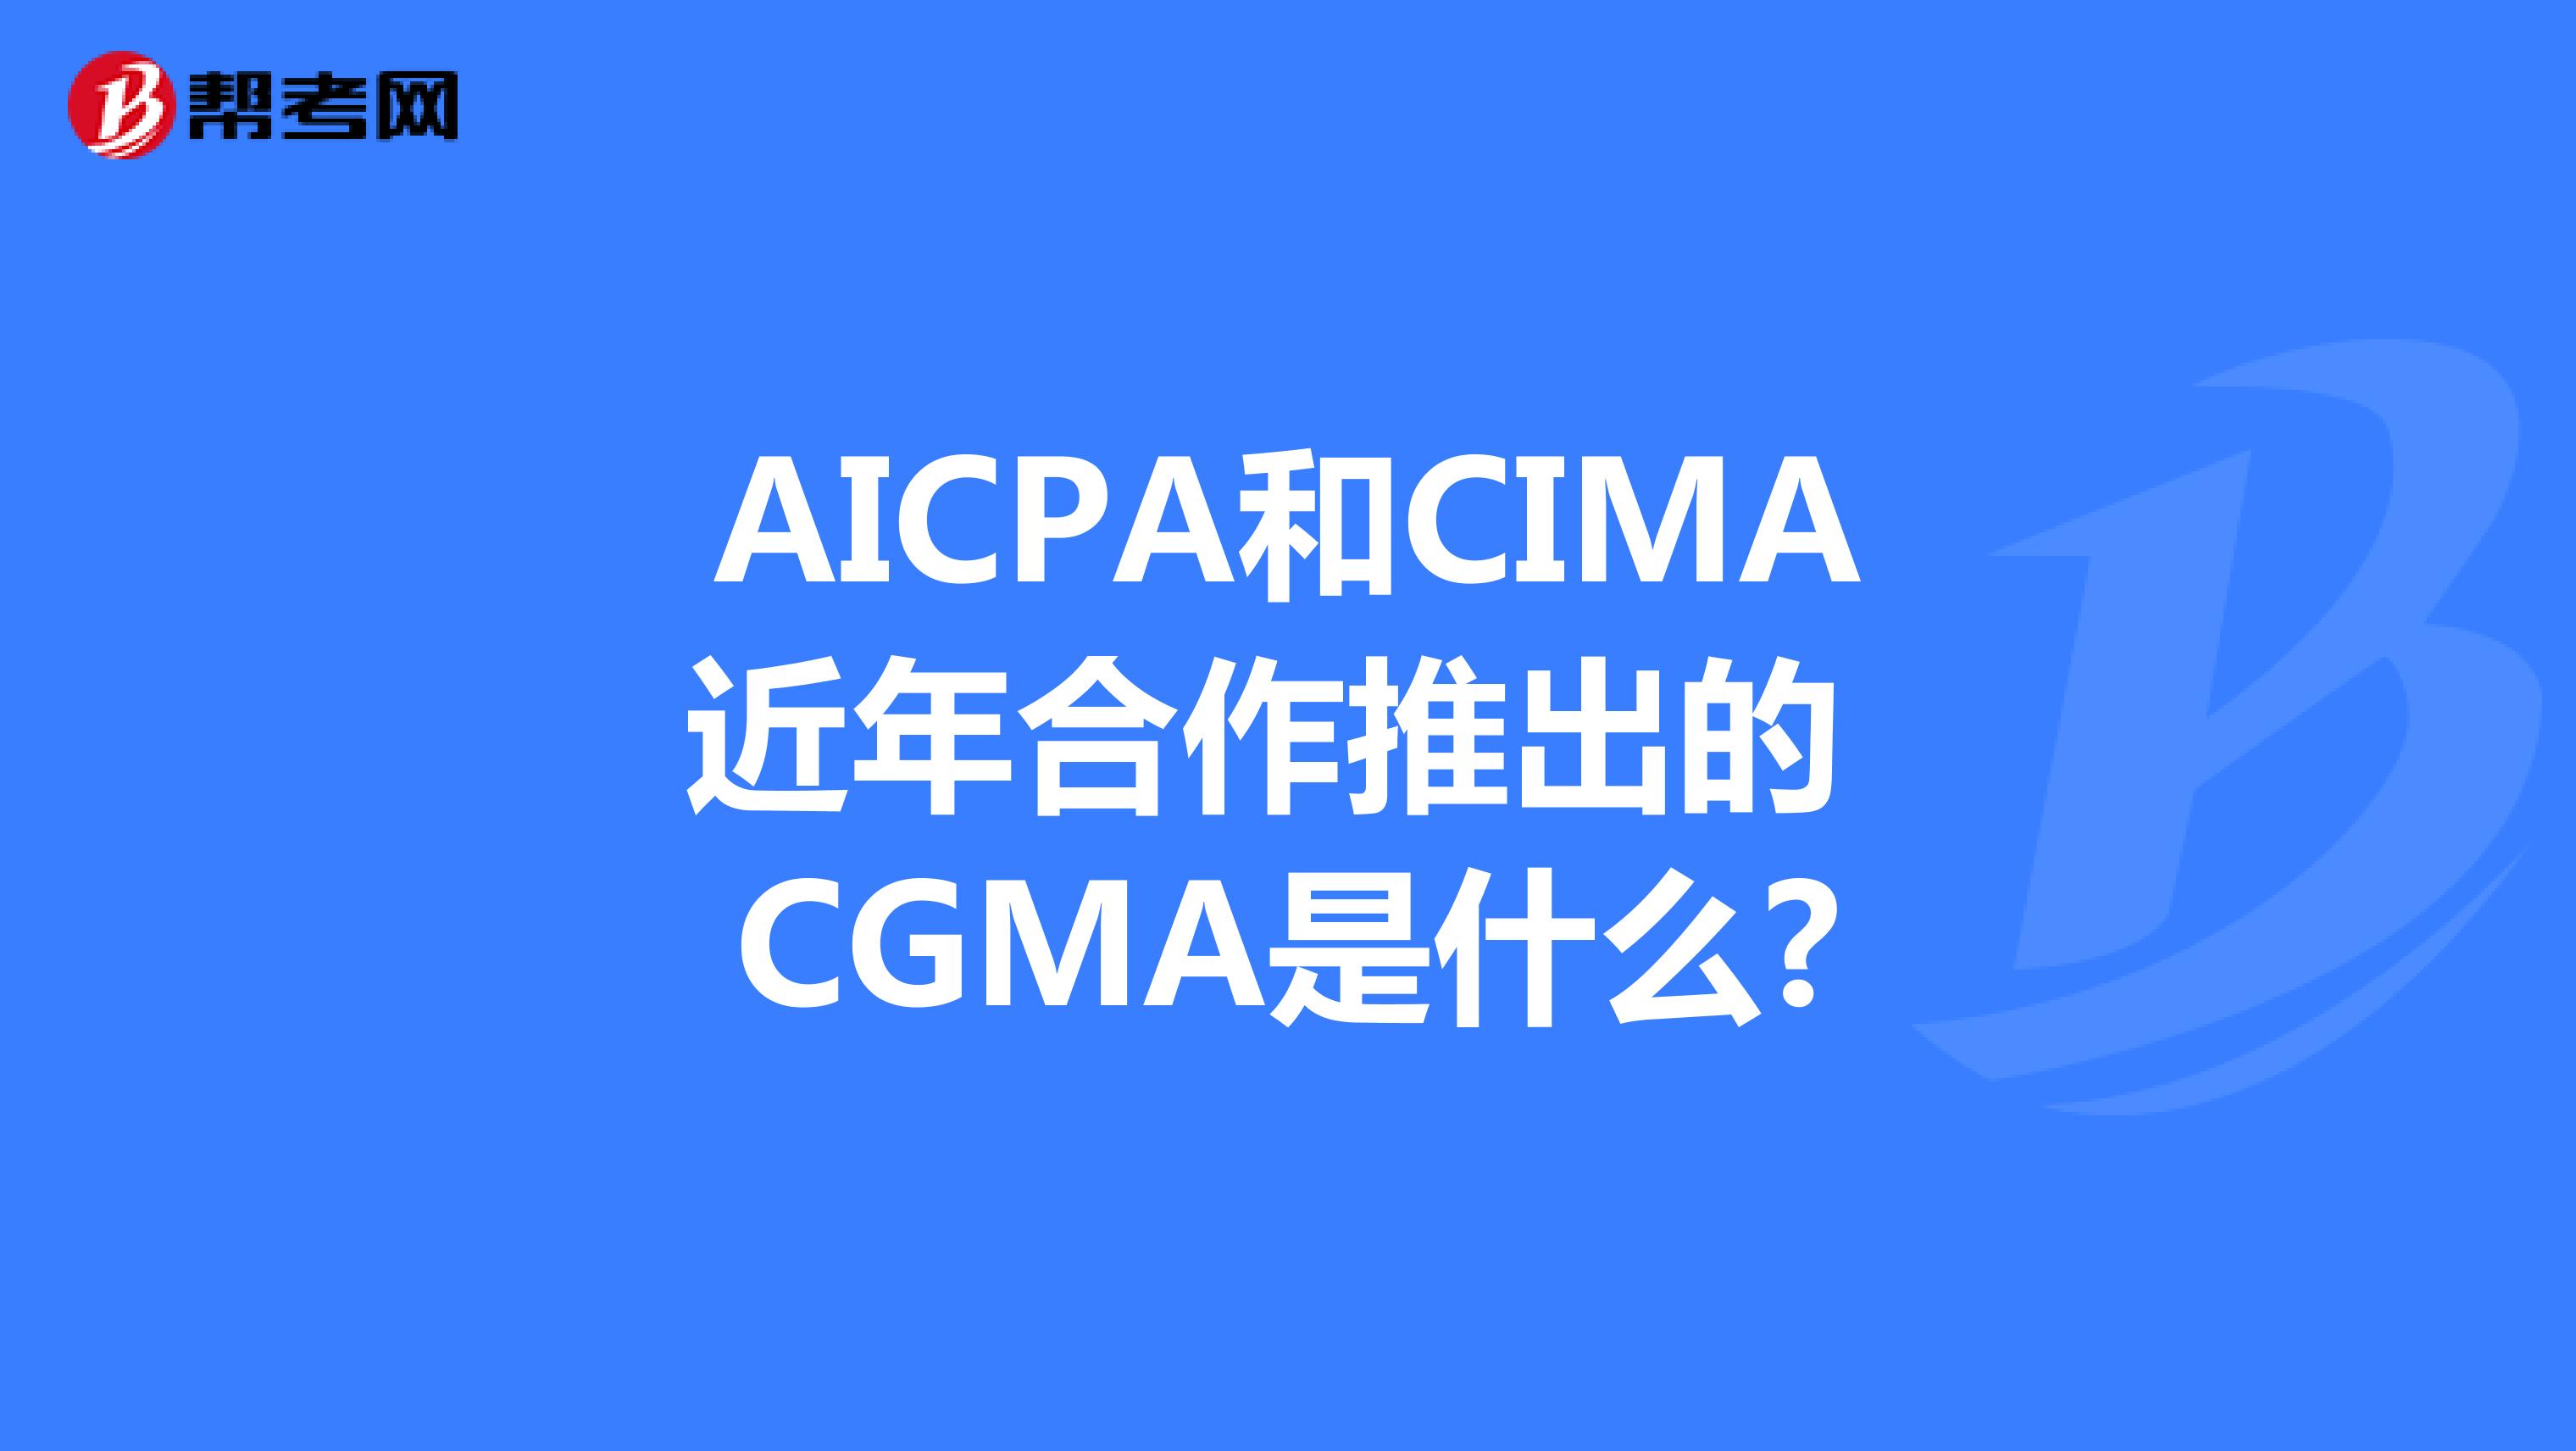 AICPA和CIMA 近年合作推出的CGMA是什么?